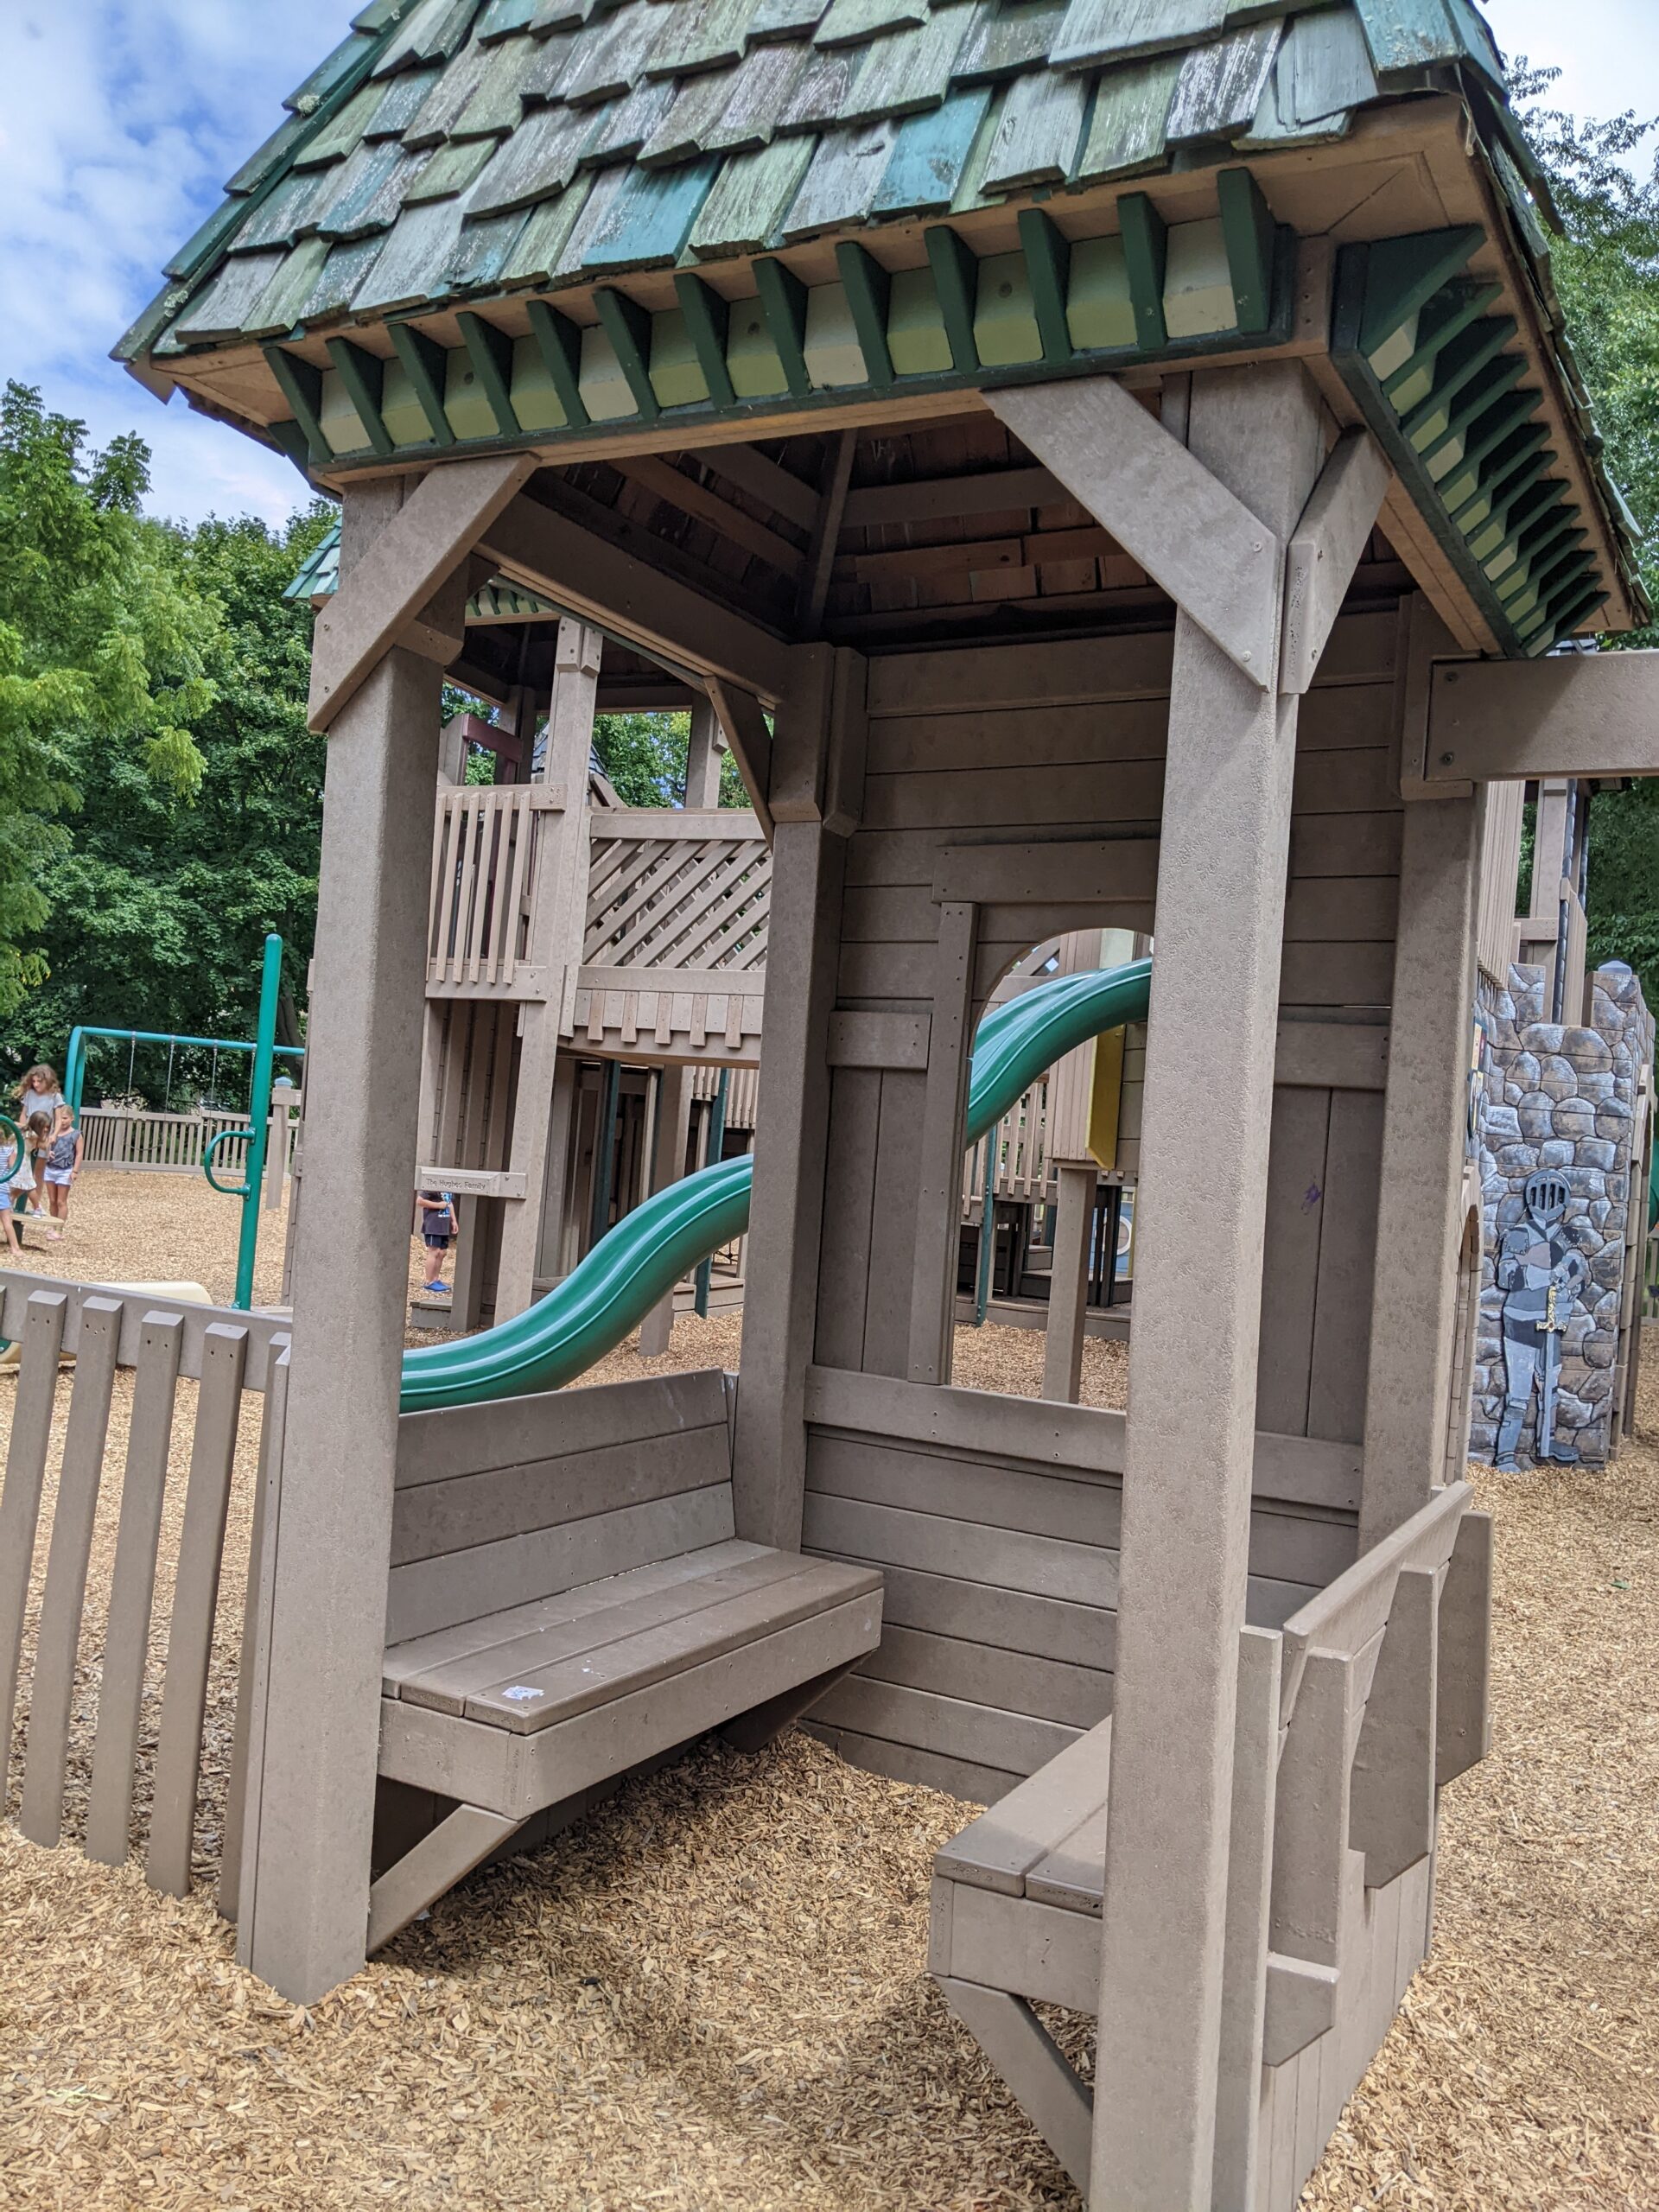 Frank Fullerton Memorial Park Playground in Moorestown NJ - SHADY - Seating preschool playground